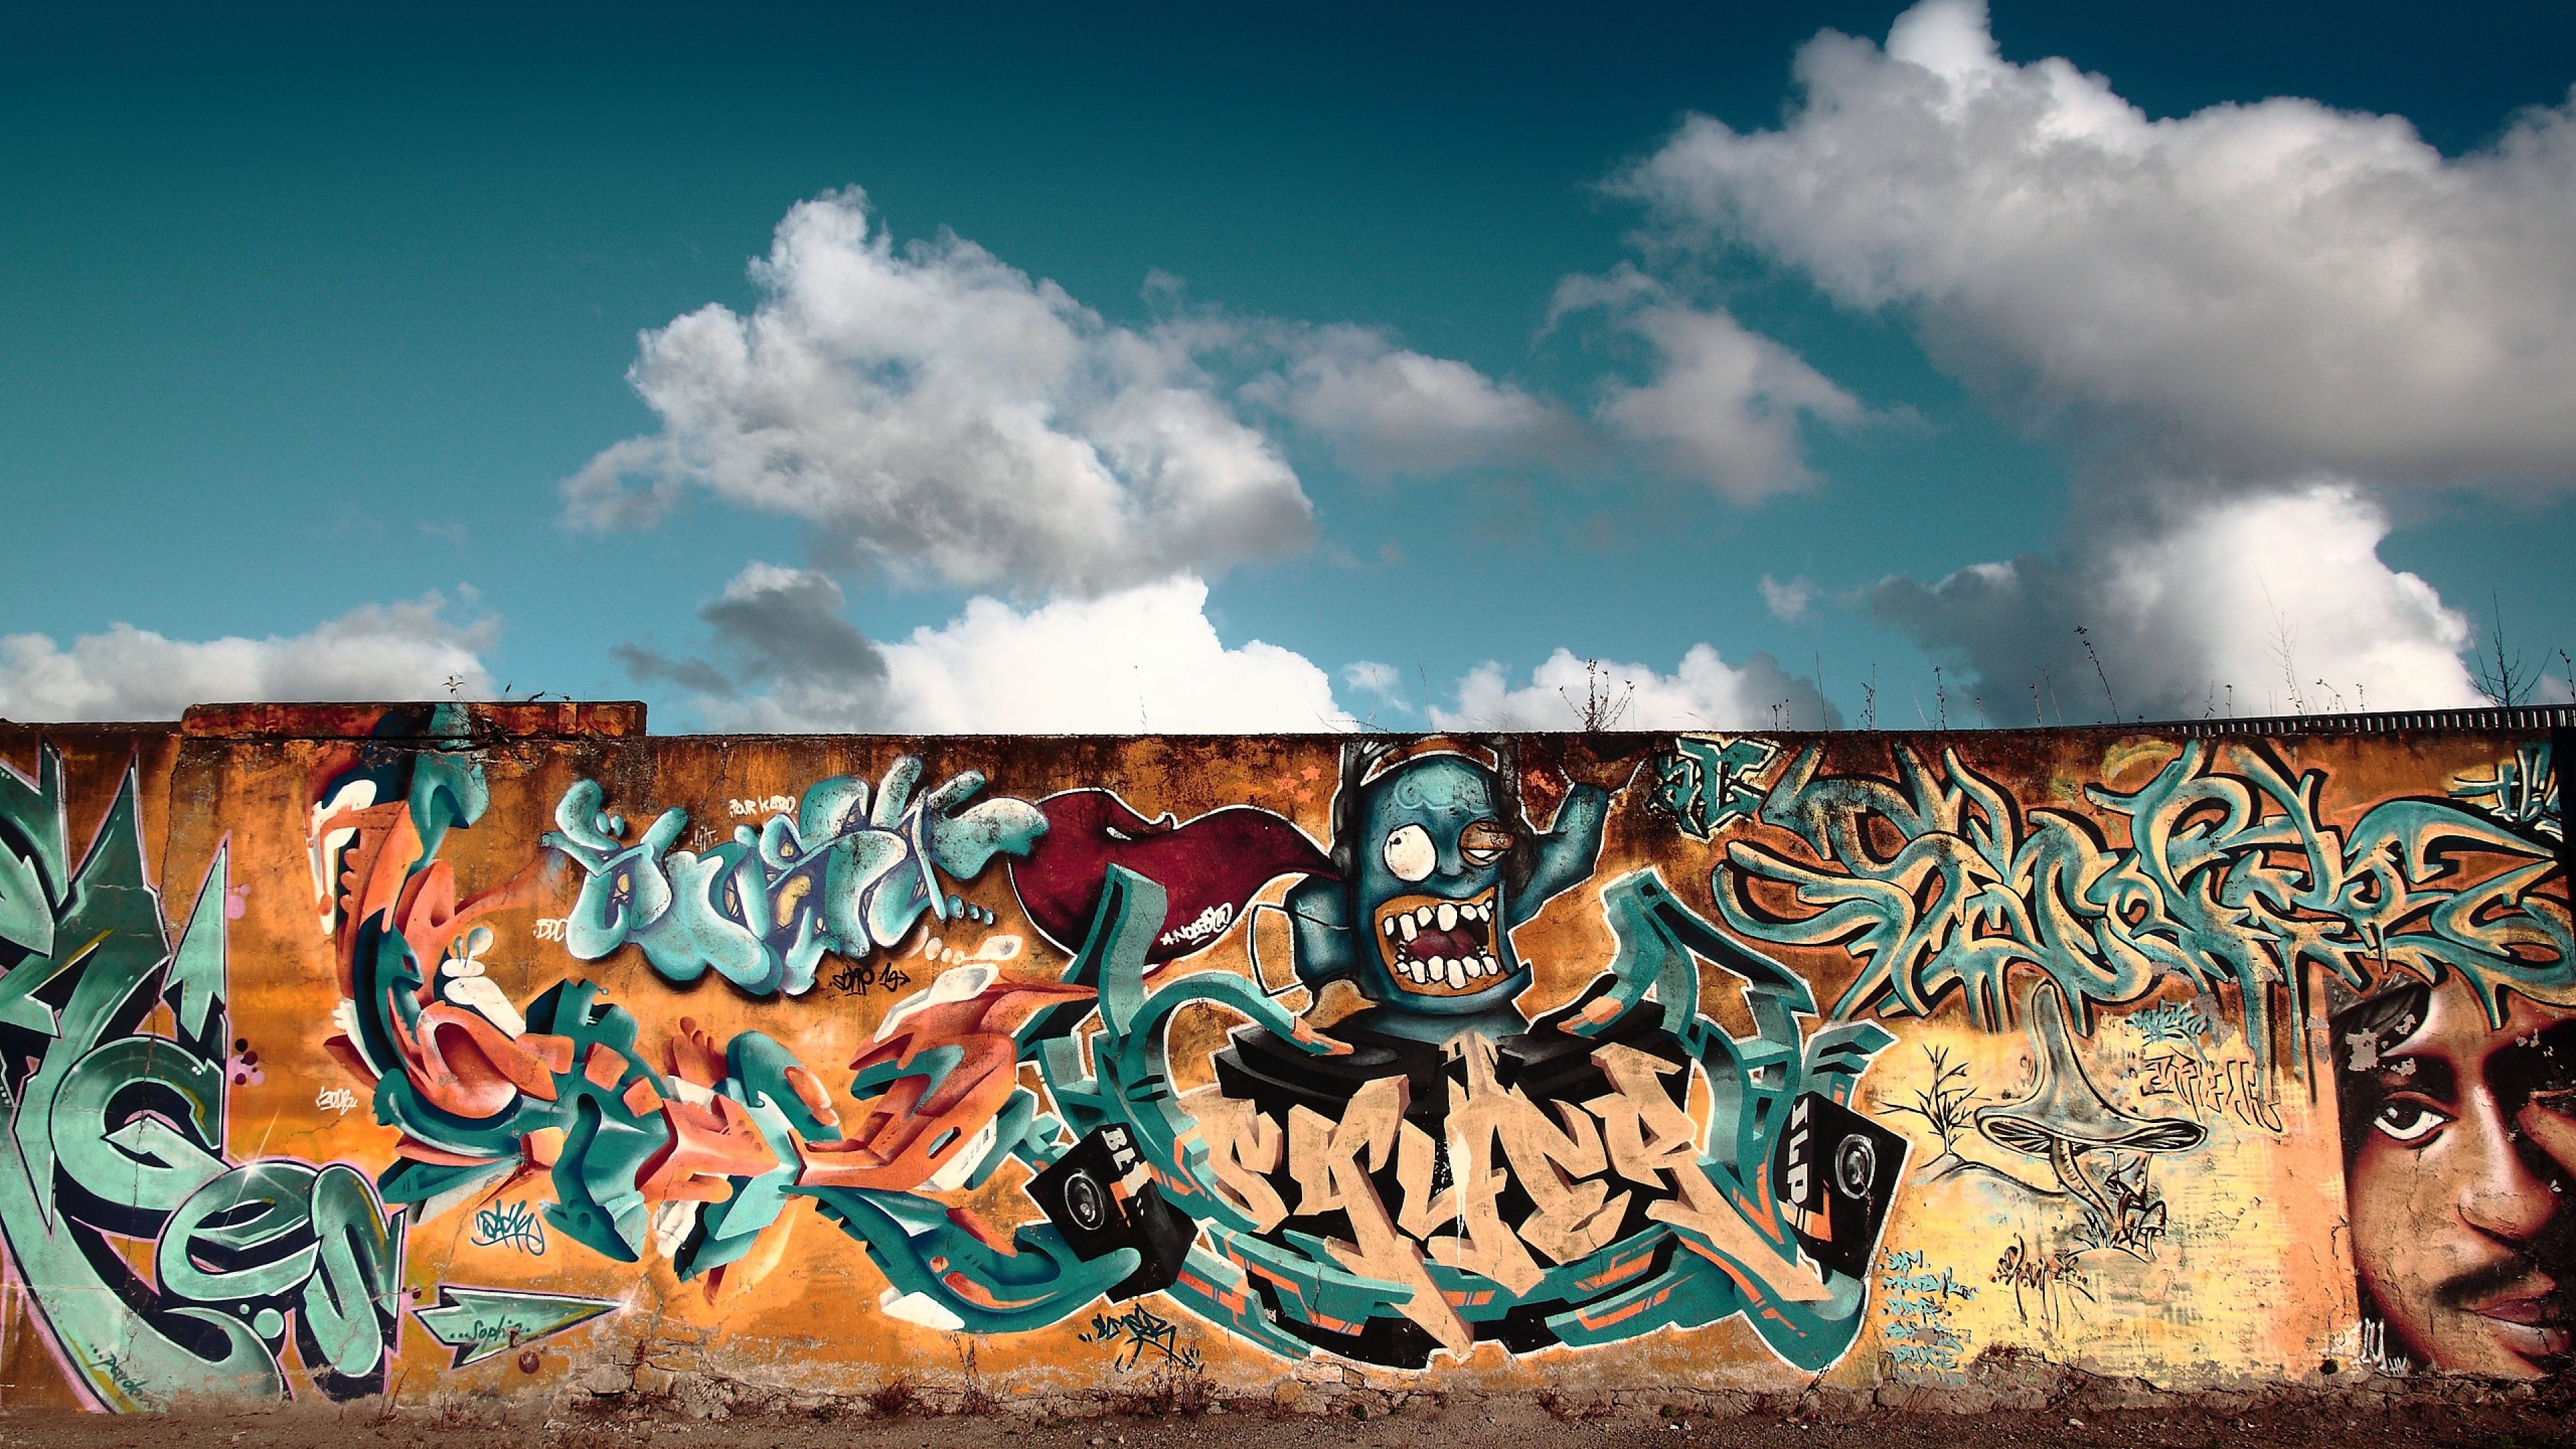 Graffiti Background Wall Street Art | Wallpapers, Backgrounds ...